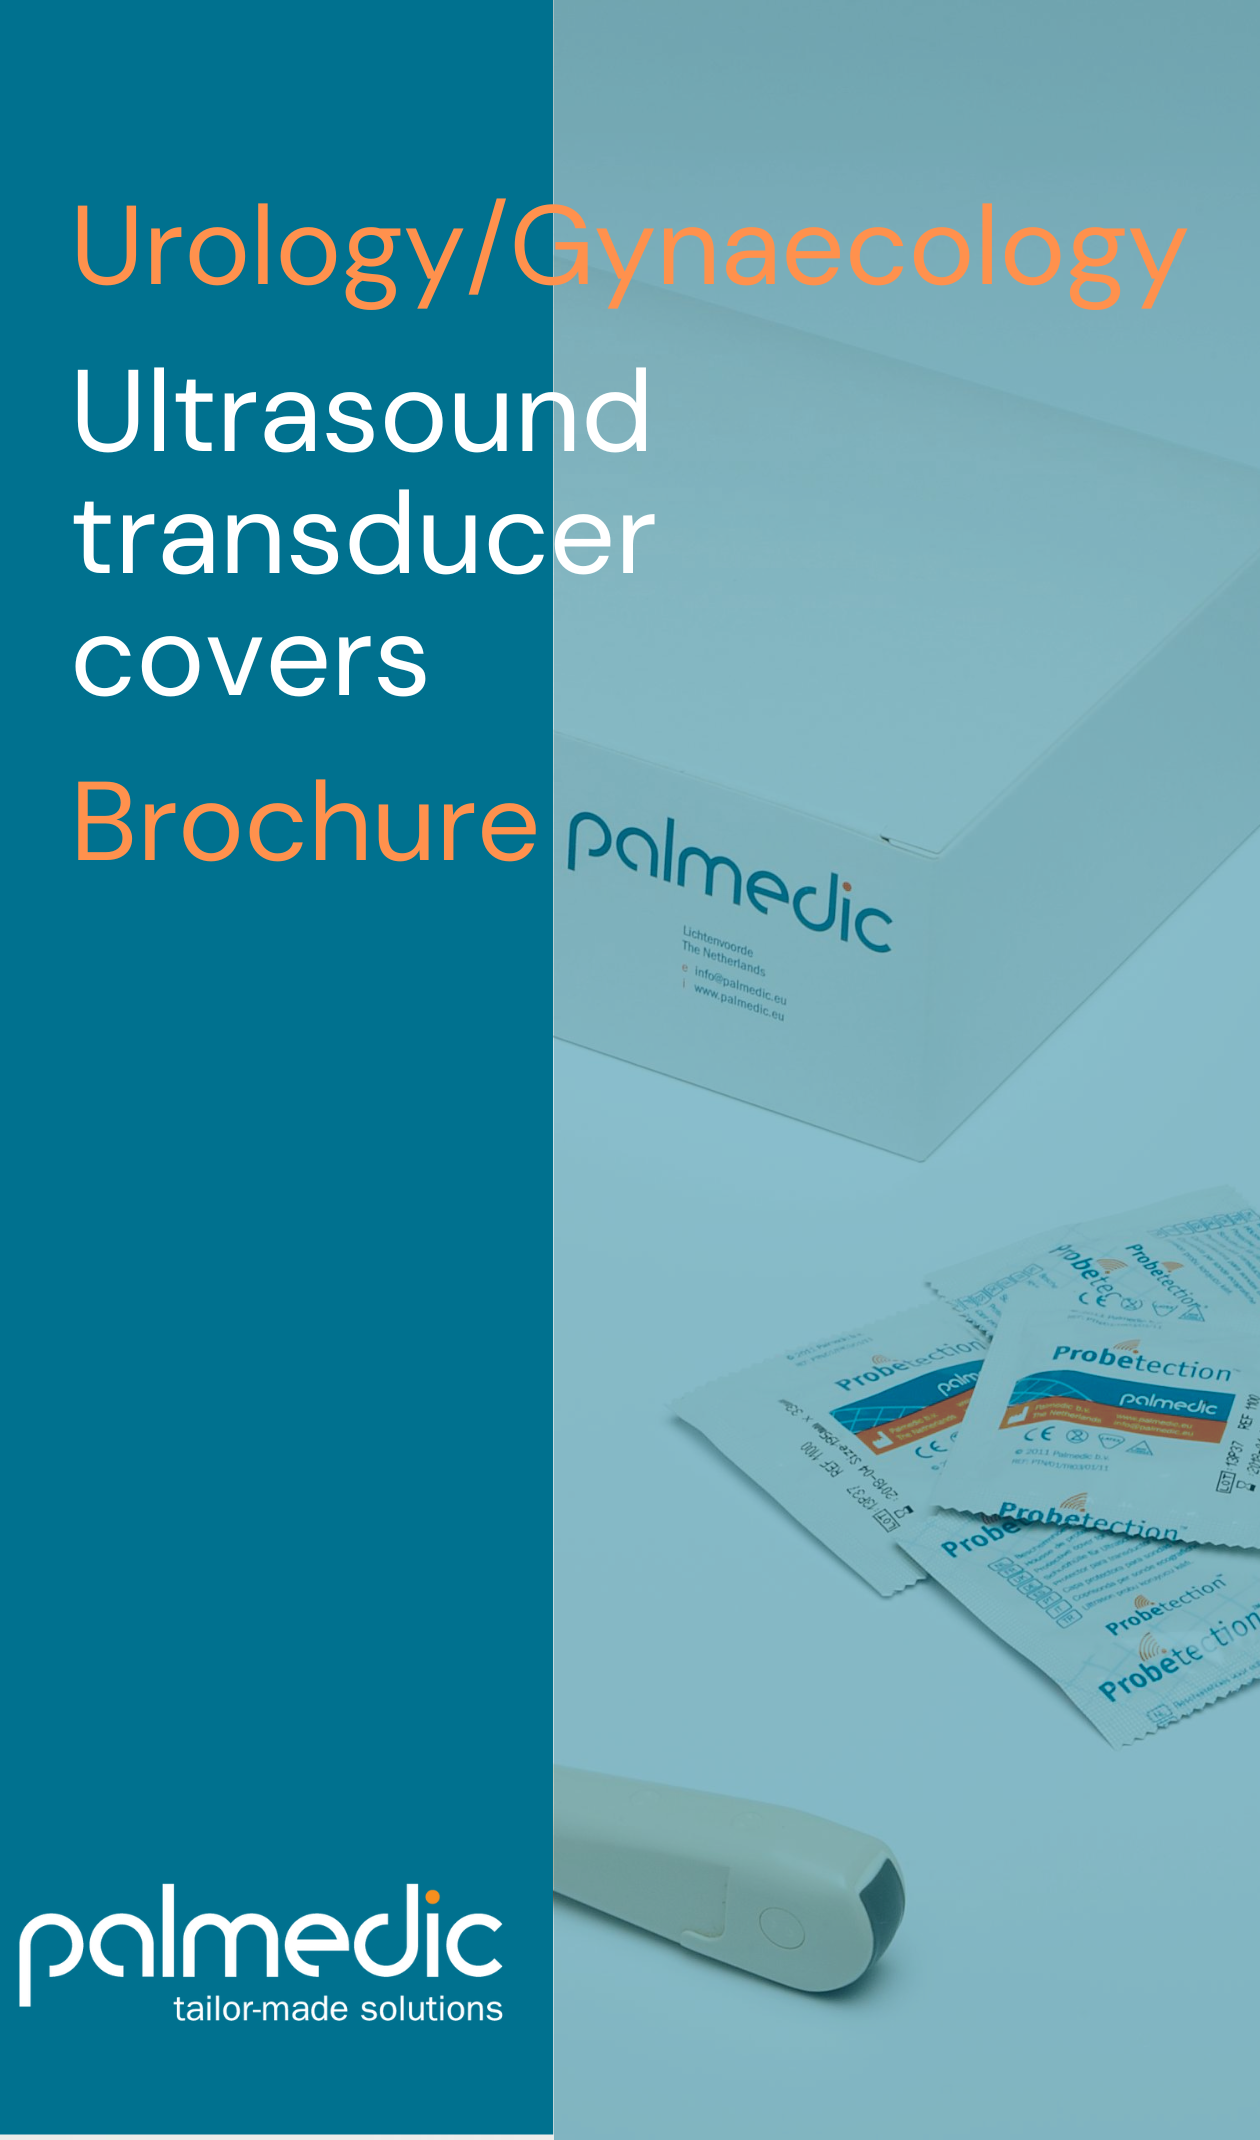 Ultrasound transducer covers Archives - Palmedic